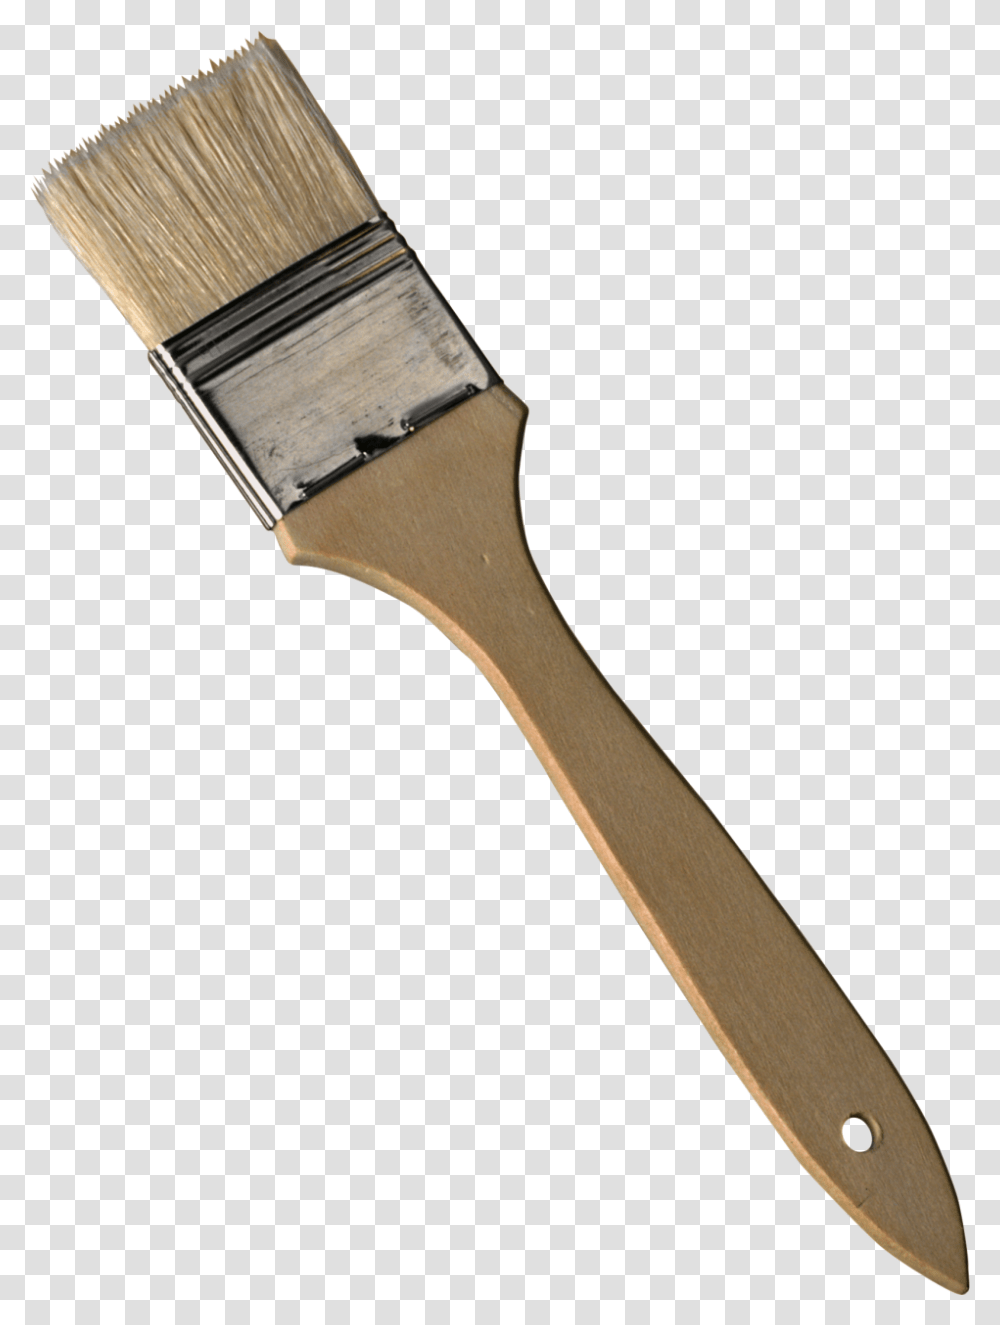 Paint Brush Image Kist, Tool, Toothbrush Transparent Png